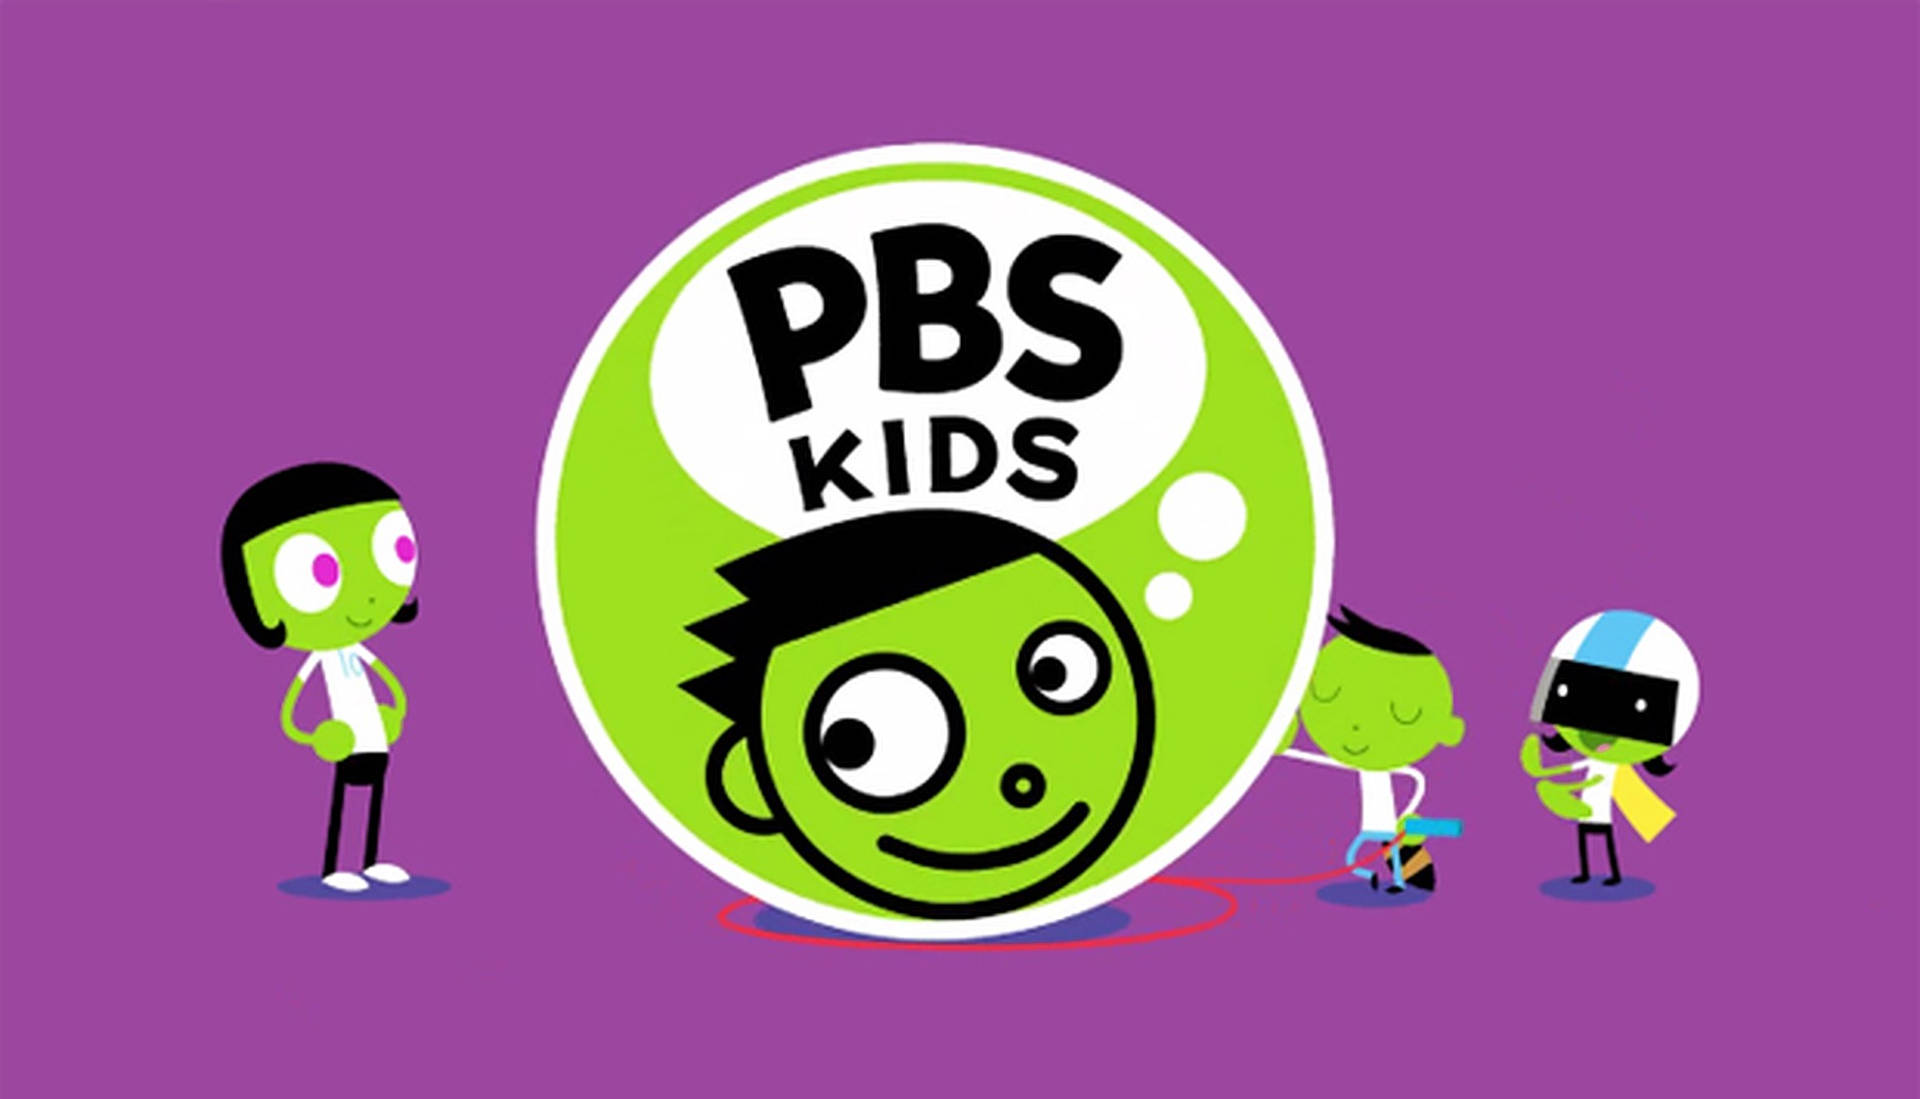 Pbs Kids Purple Poster Background